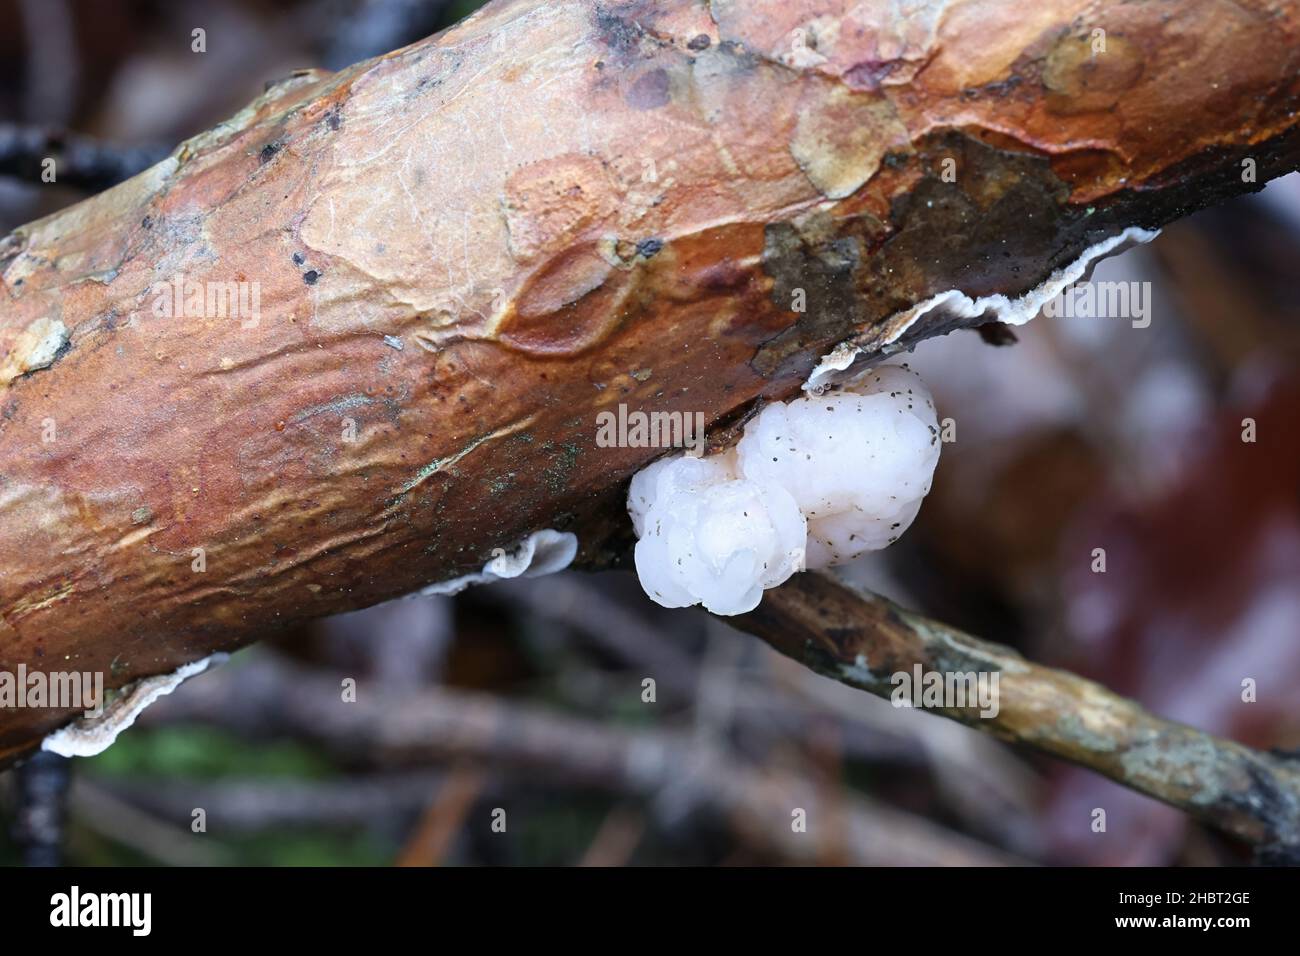 Conifer brain, Tremella encephala, growing parasitic on bleeding conifer crust, Stereum sanguinolentum Stock Photo